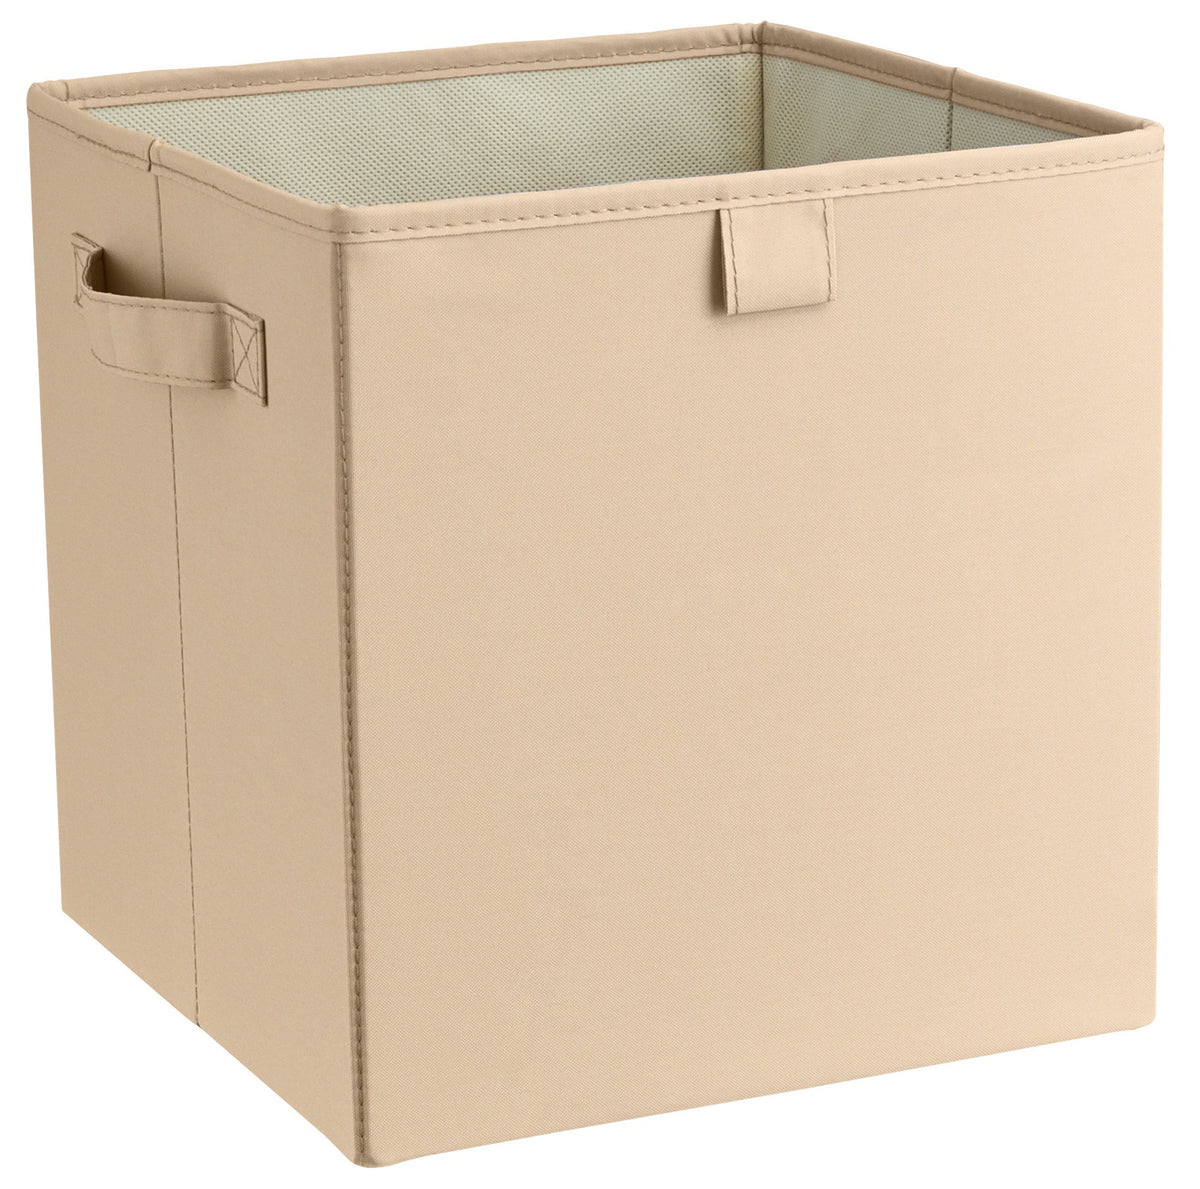 buy drawer organizer at cheap rate in bulk. wholesale & retail storage & organizers supplies store.